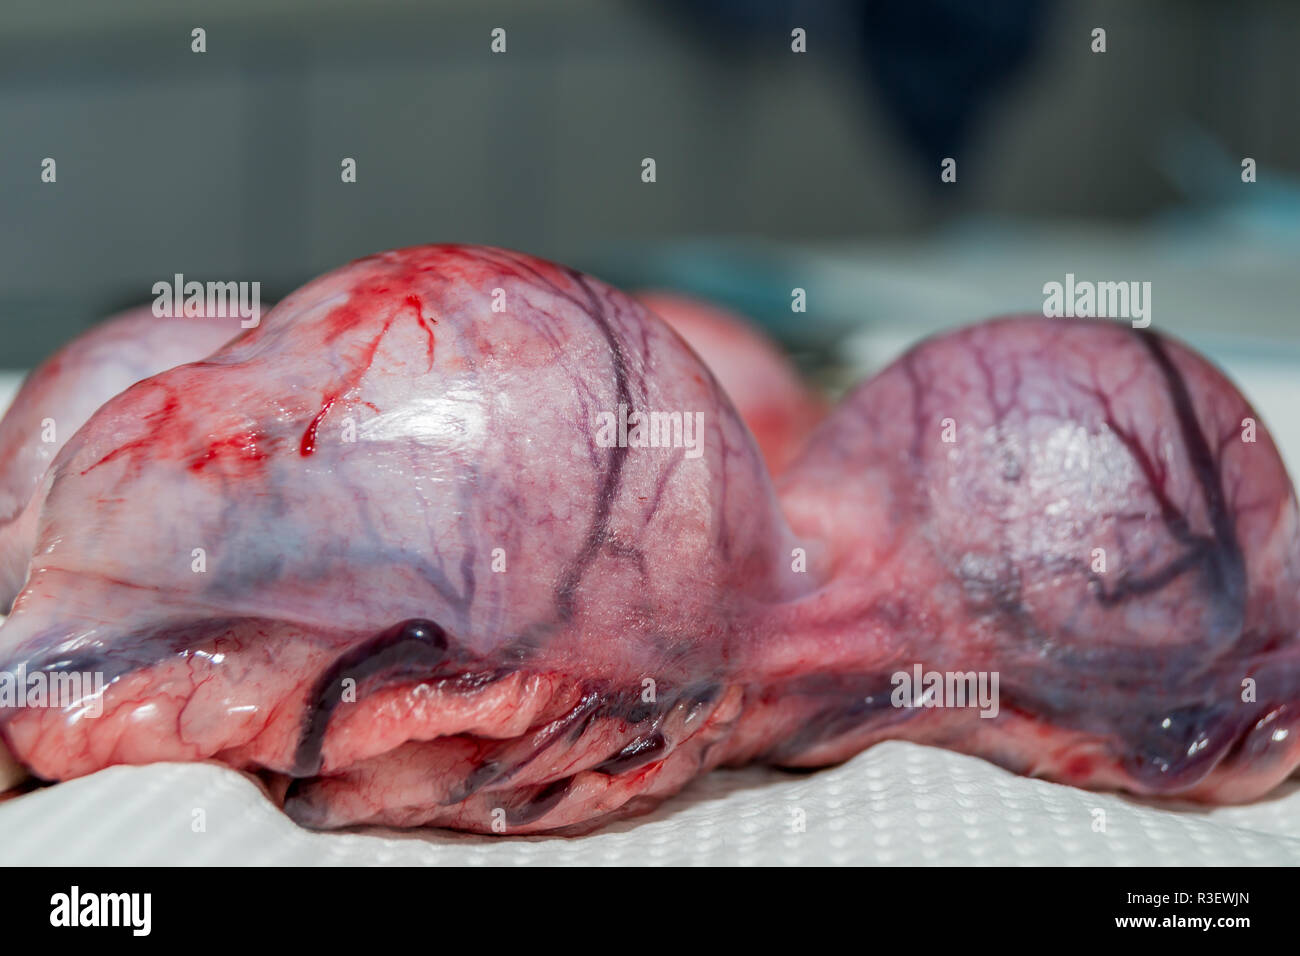 Un cane femmina utero e ovaie rimosse Foto Stock